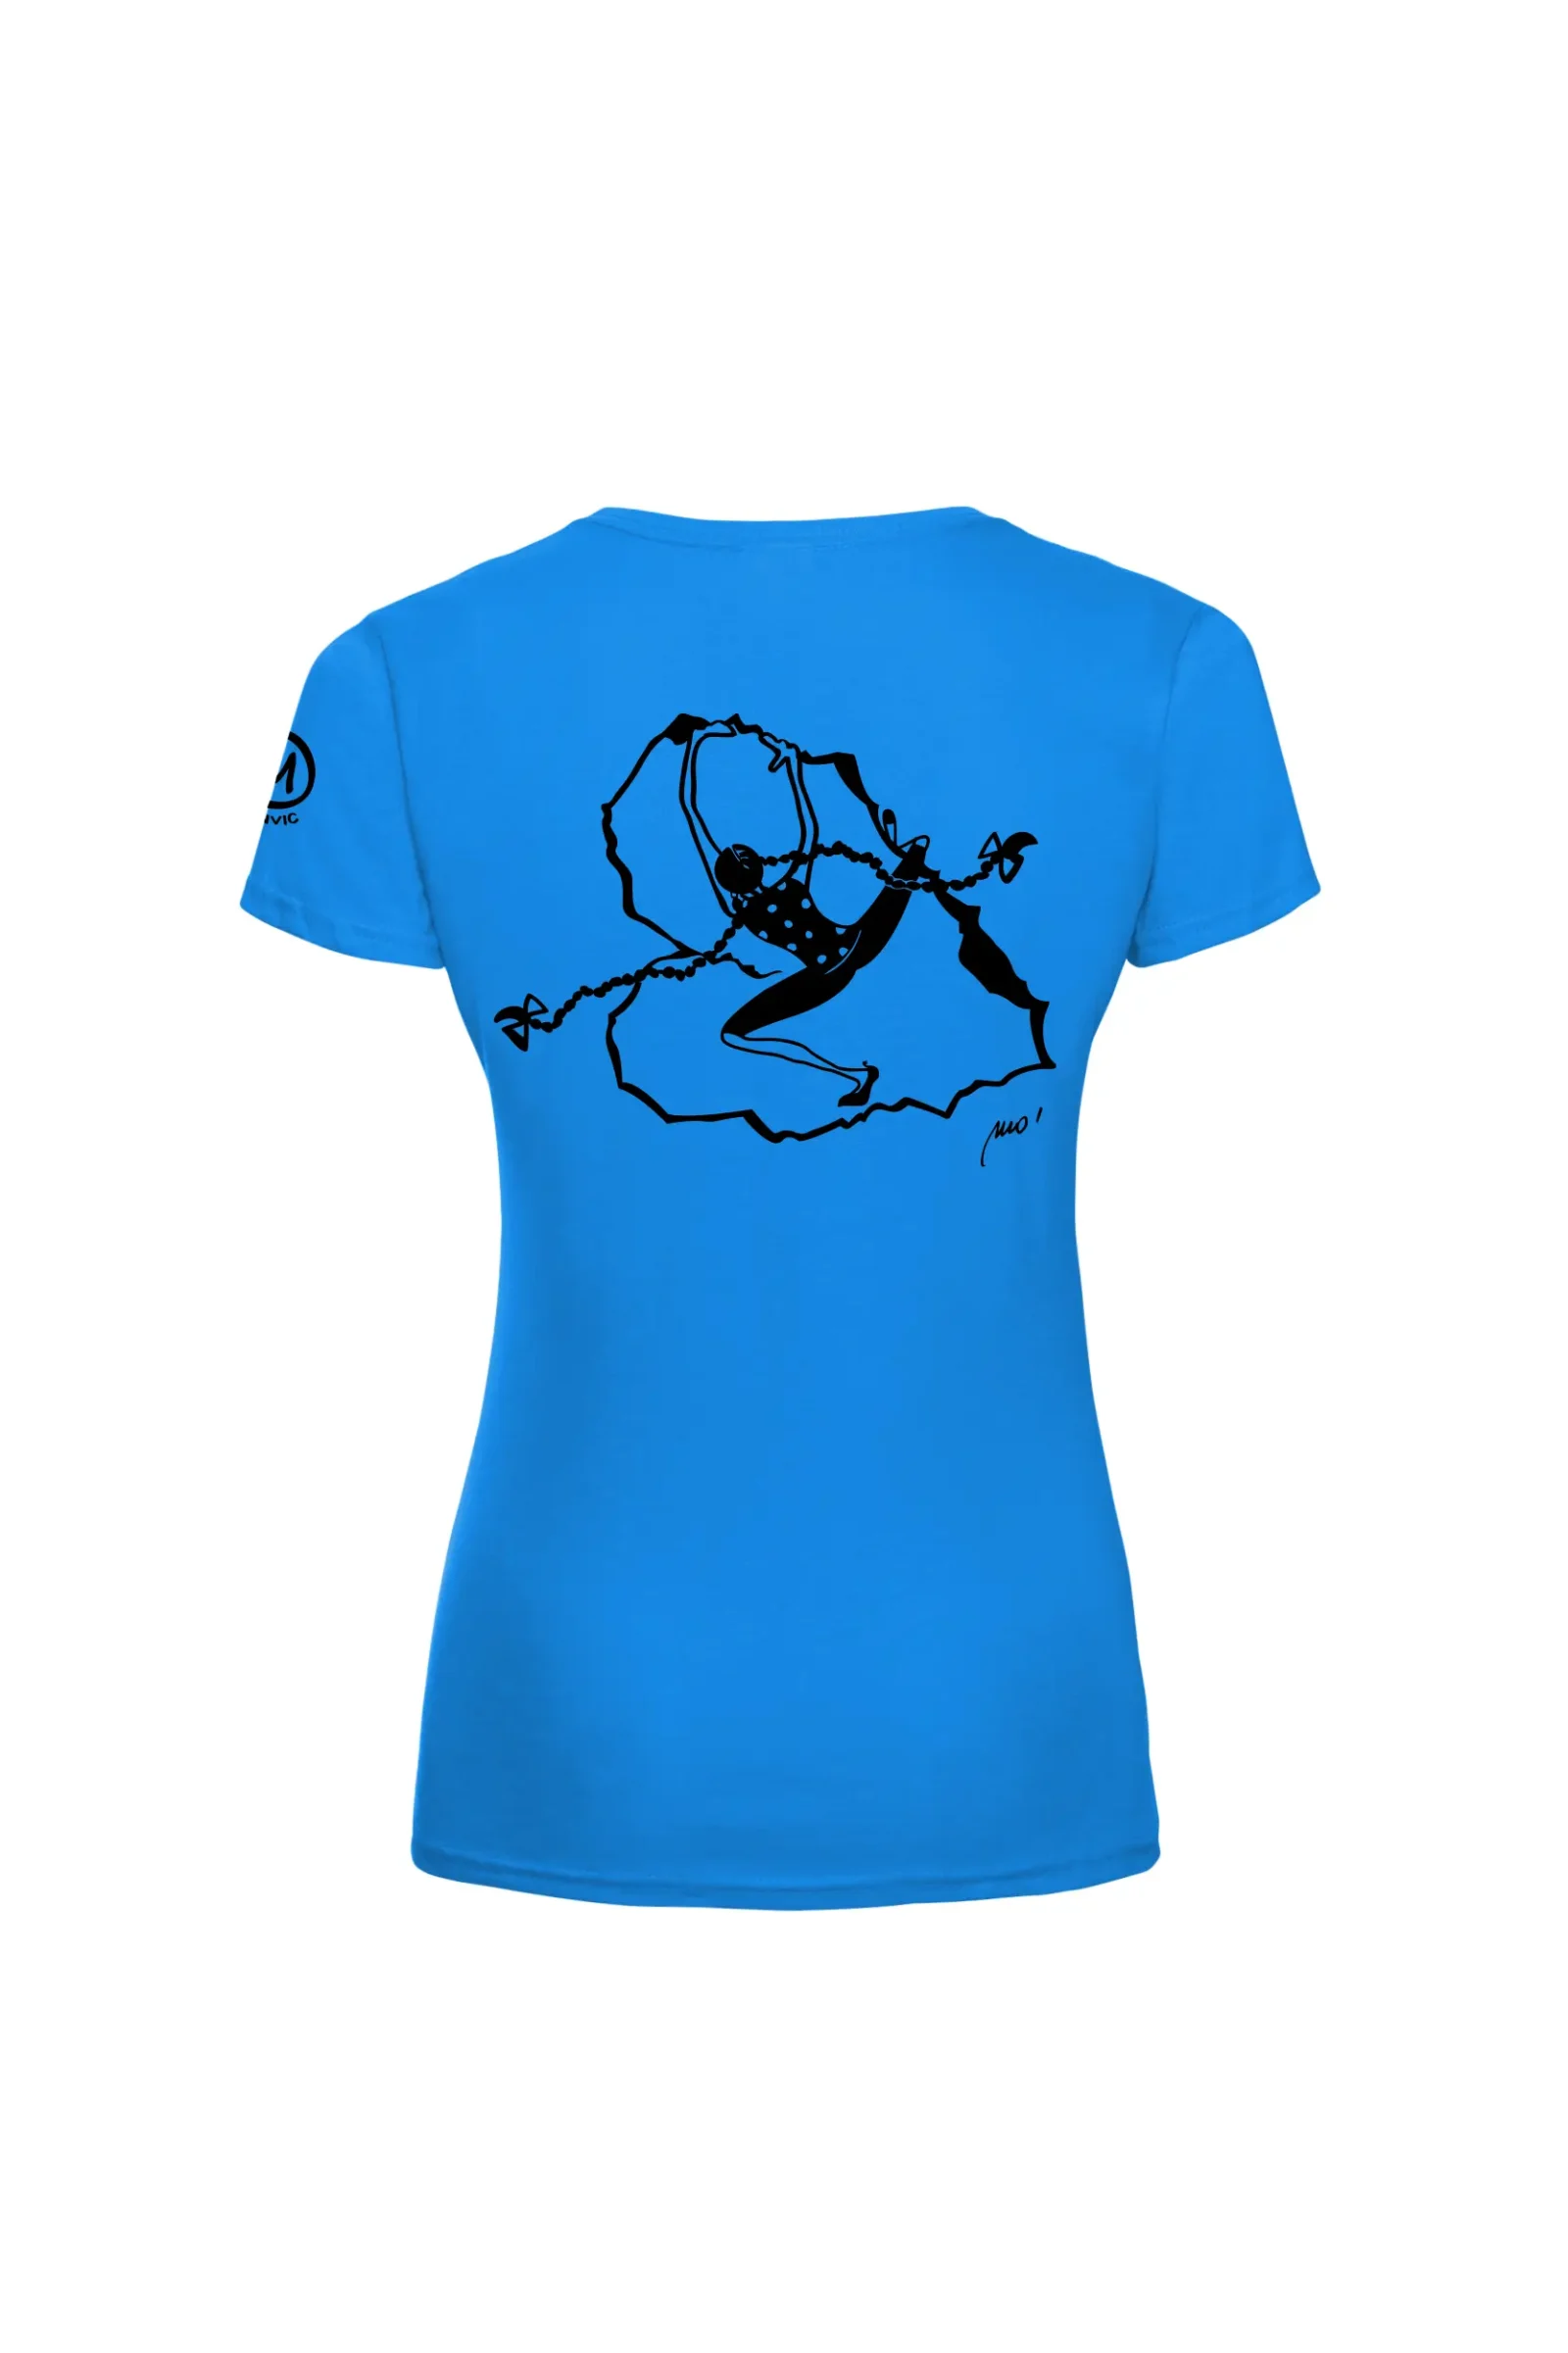 Women's climbing t-shirt - light blue cotton - "Heart of the Rock" graphic - SHARON by MONVIC